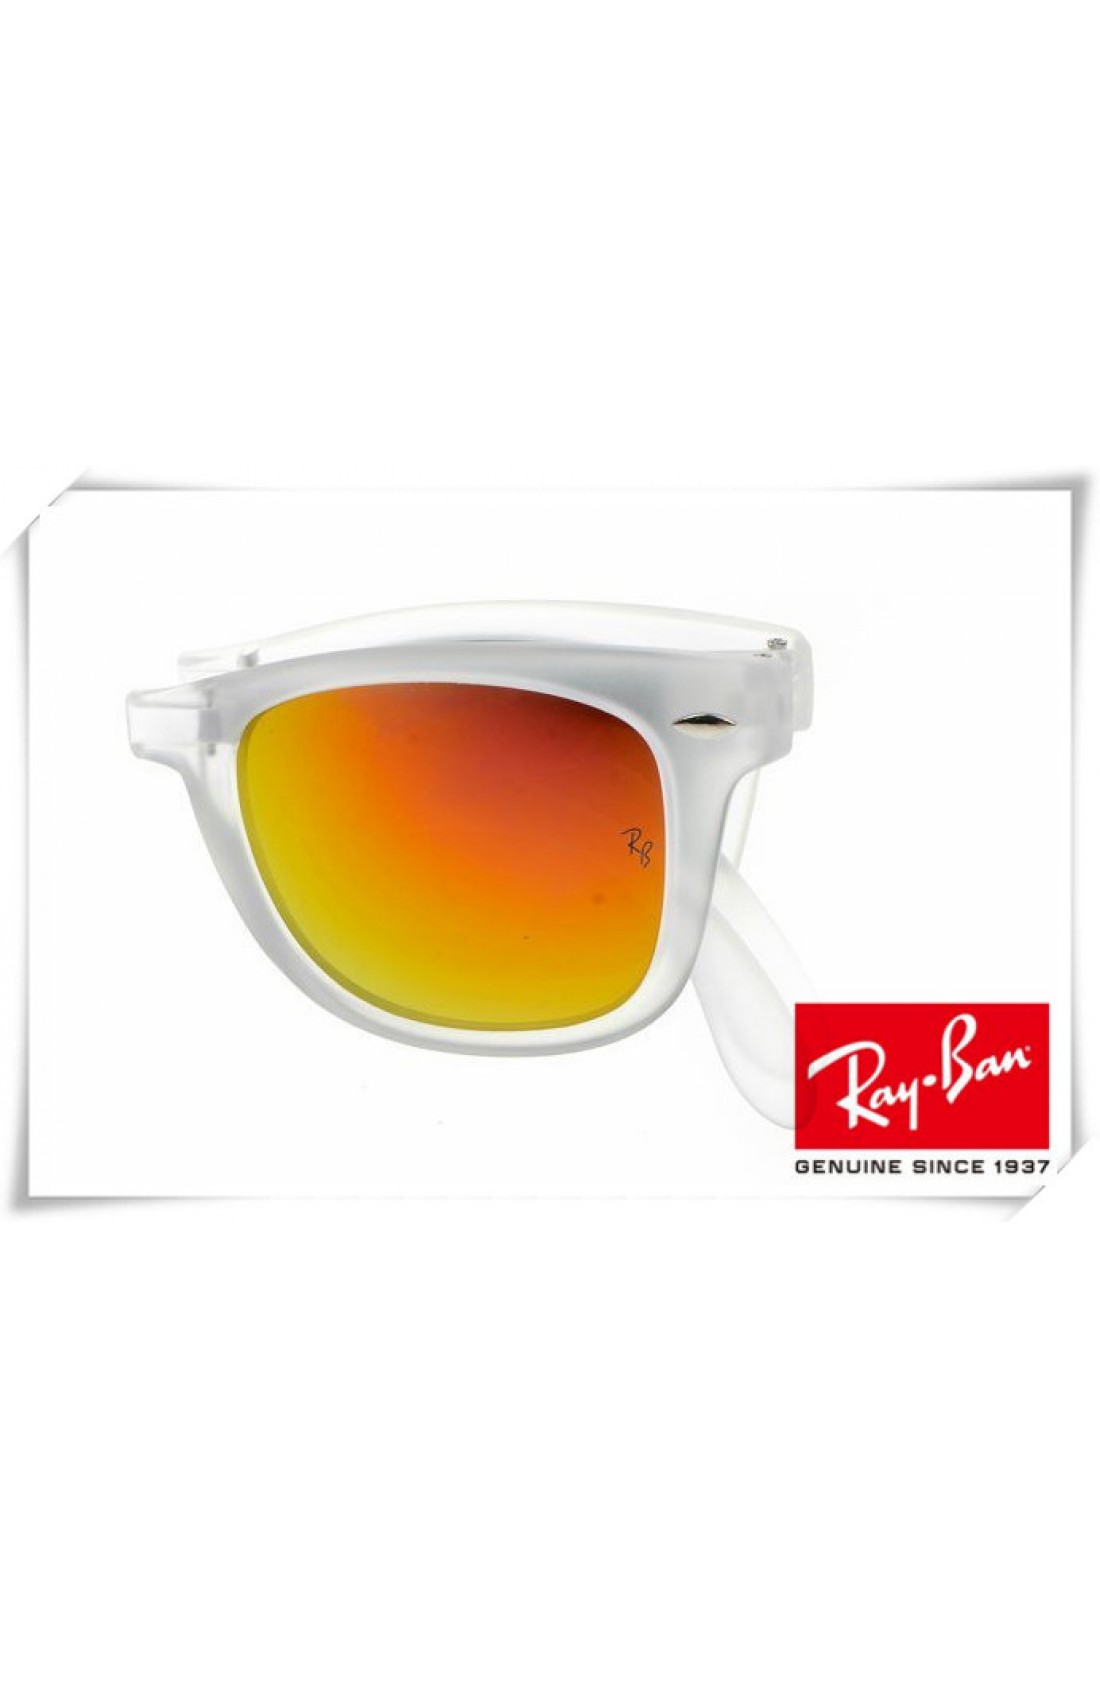 ray ban sunglasses wholesale